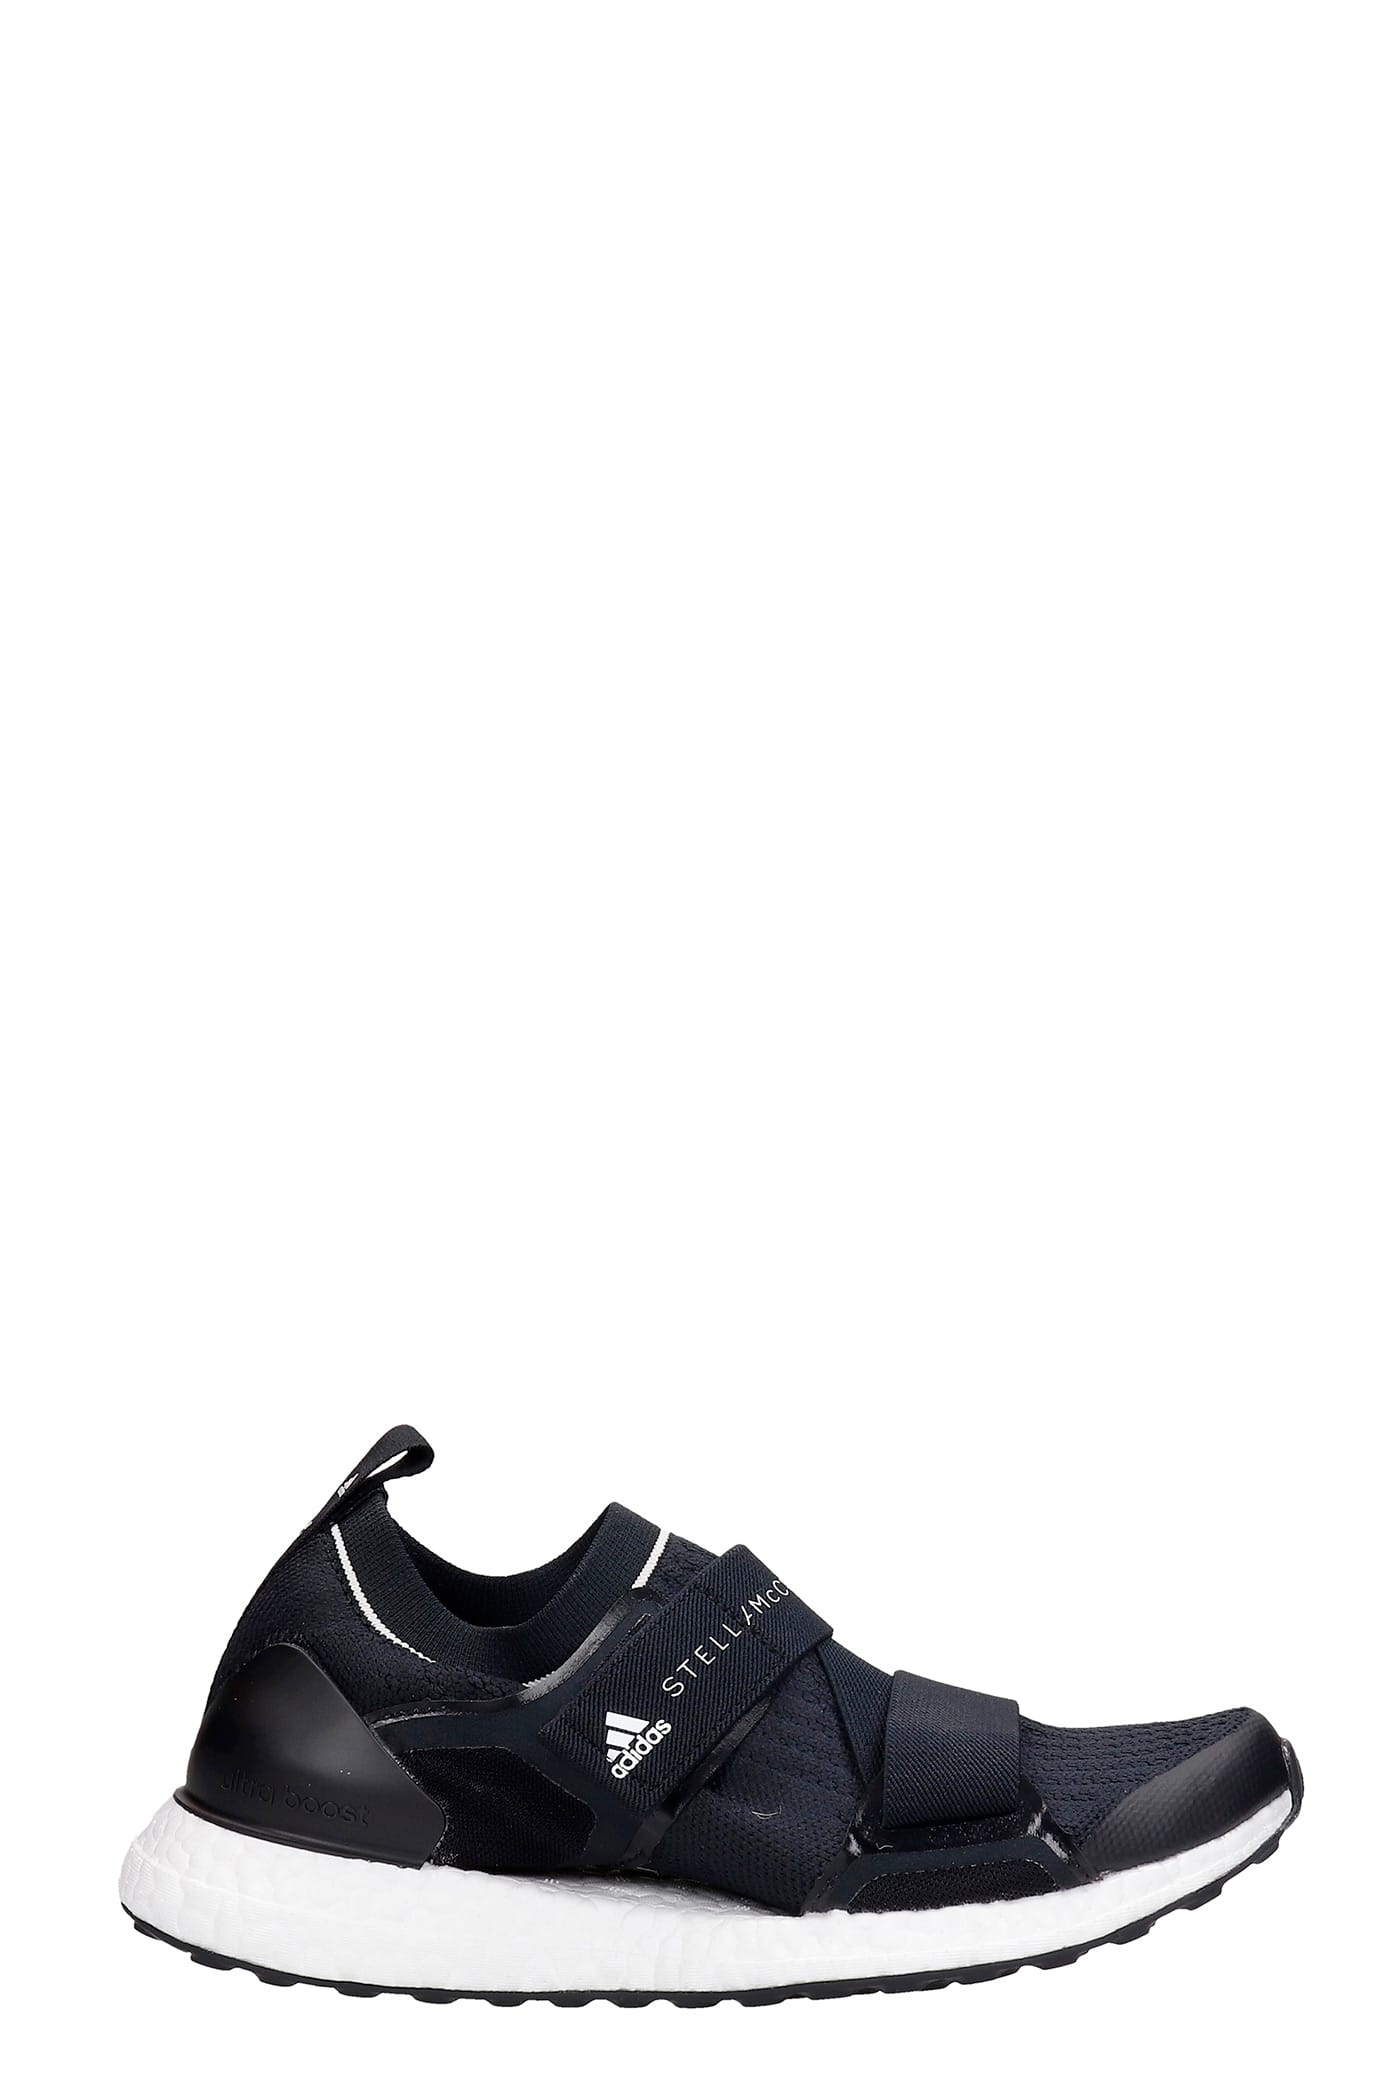 Adidas by Stella McCartney Asmc Ultraboost Sneakers In Black Synthetic Fibers